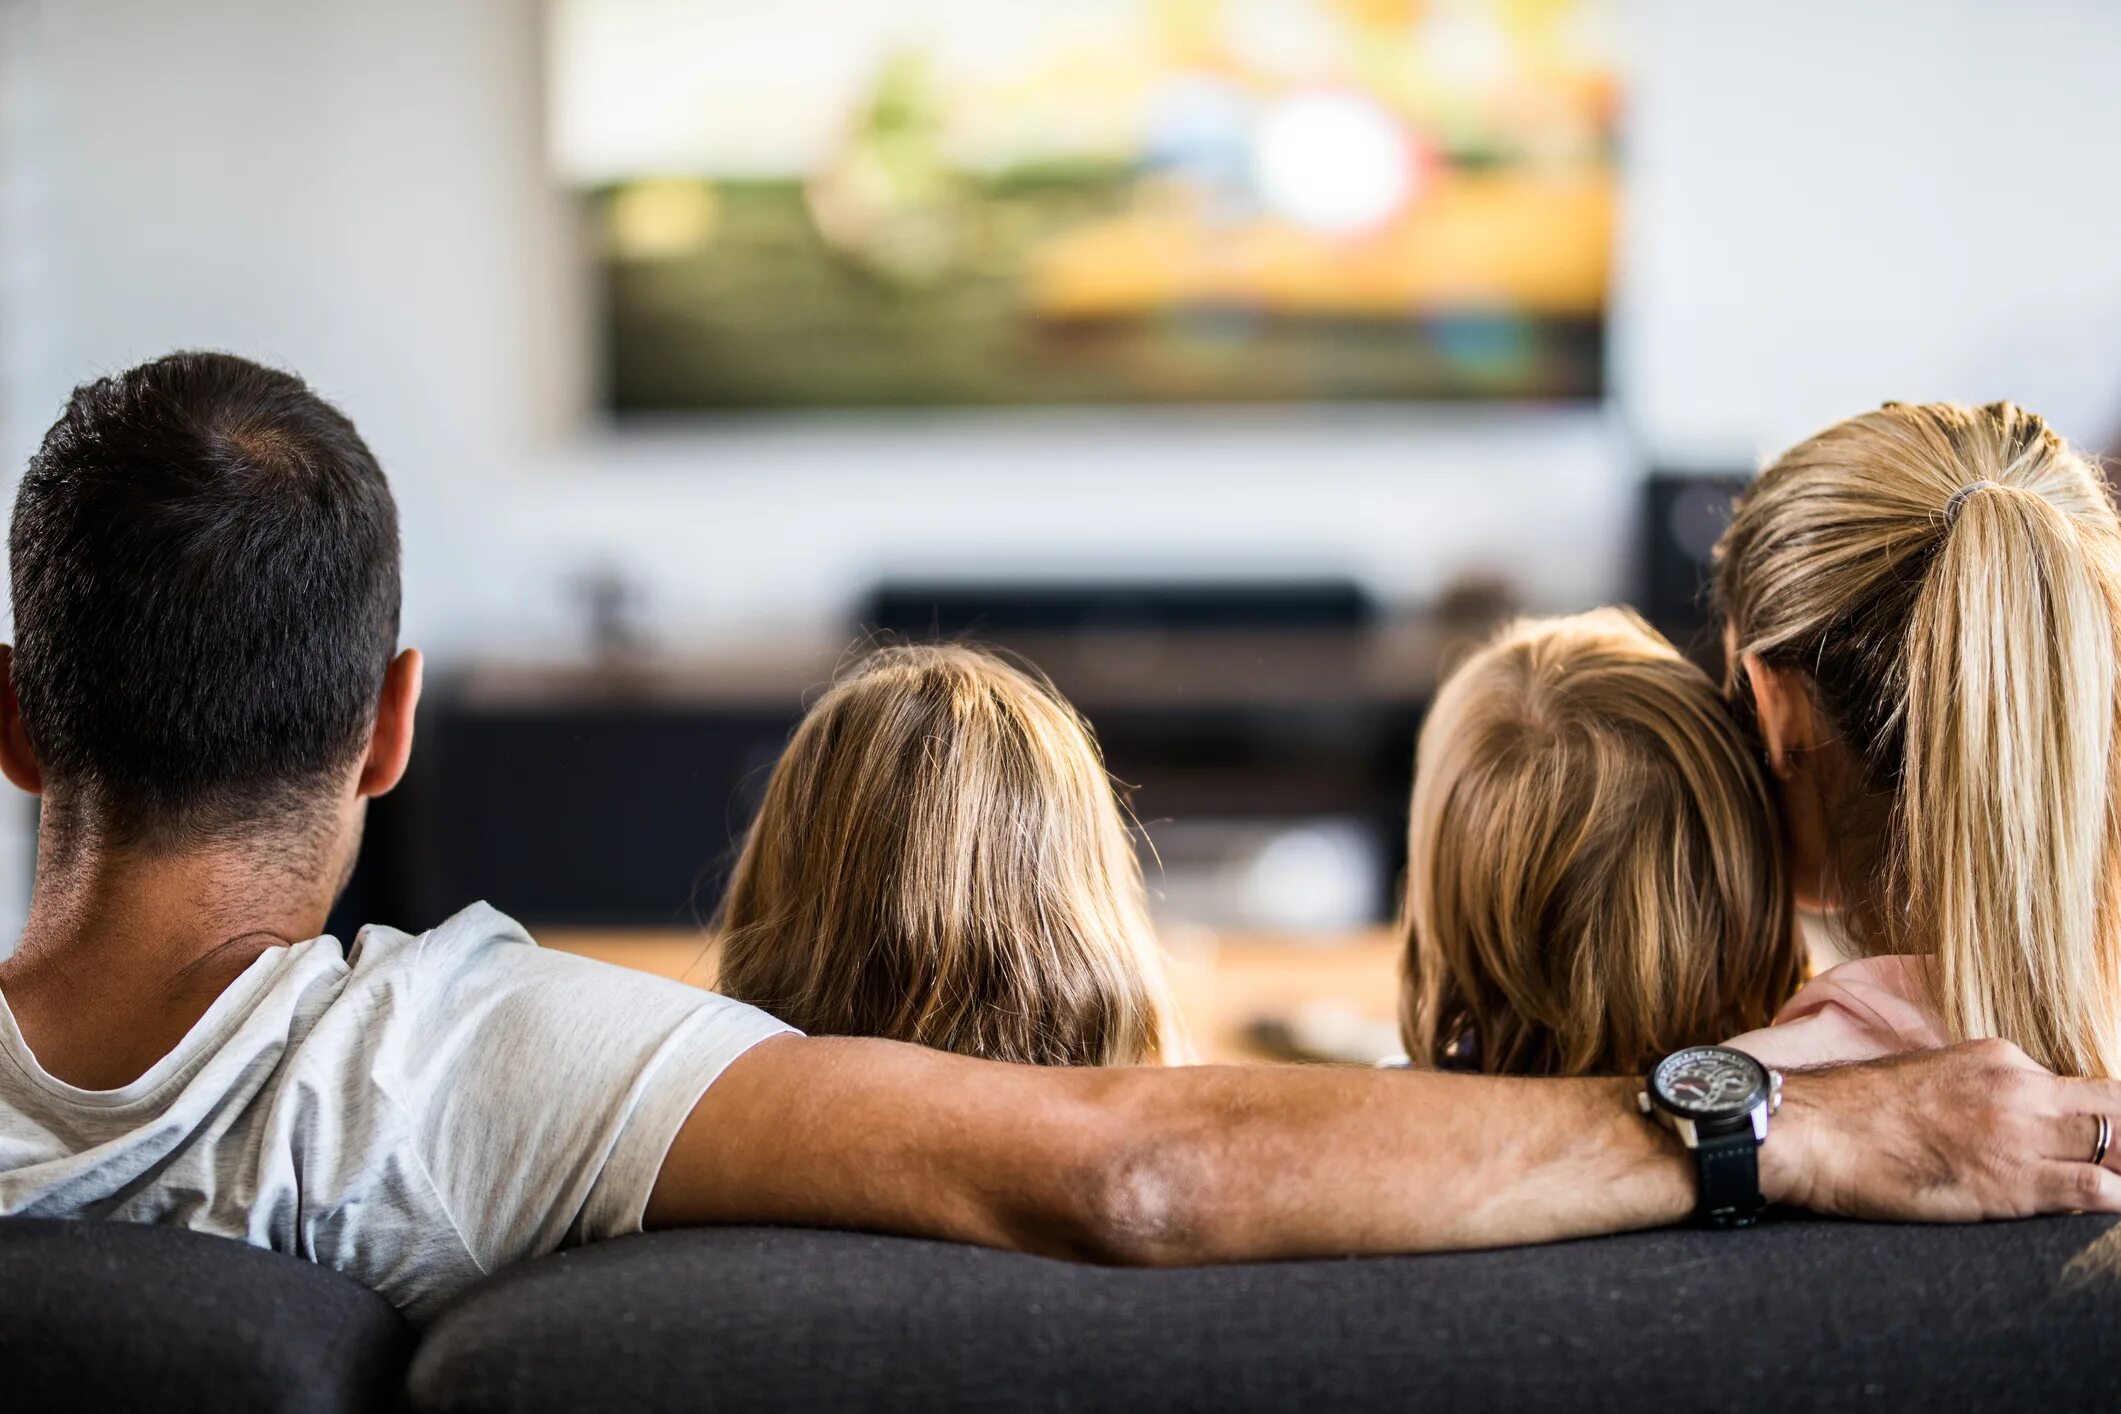 Семья на диване перед телевизором. Семья смотрит телевизор.